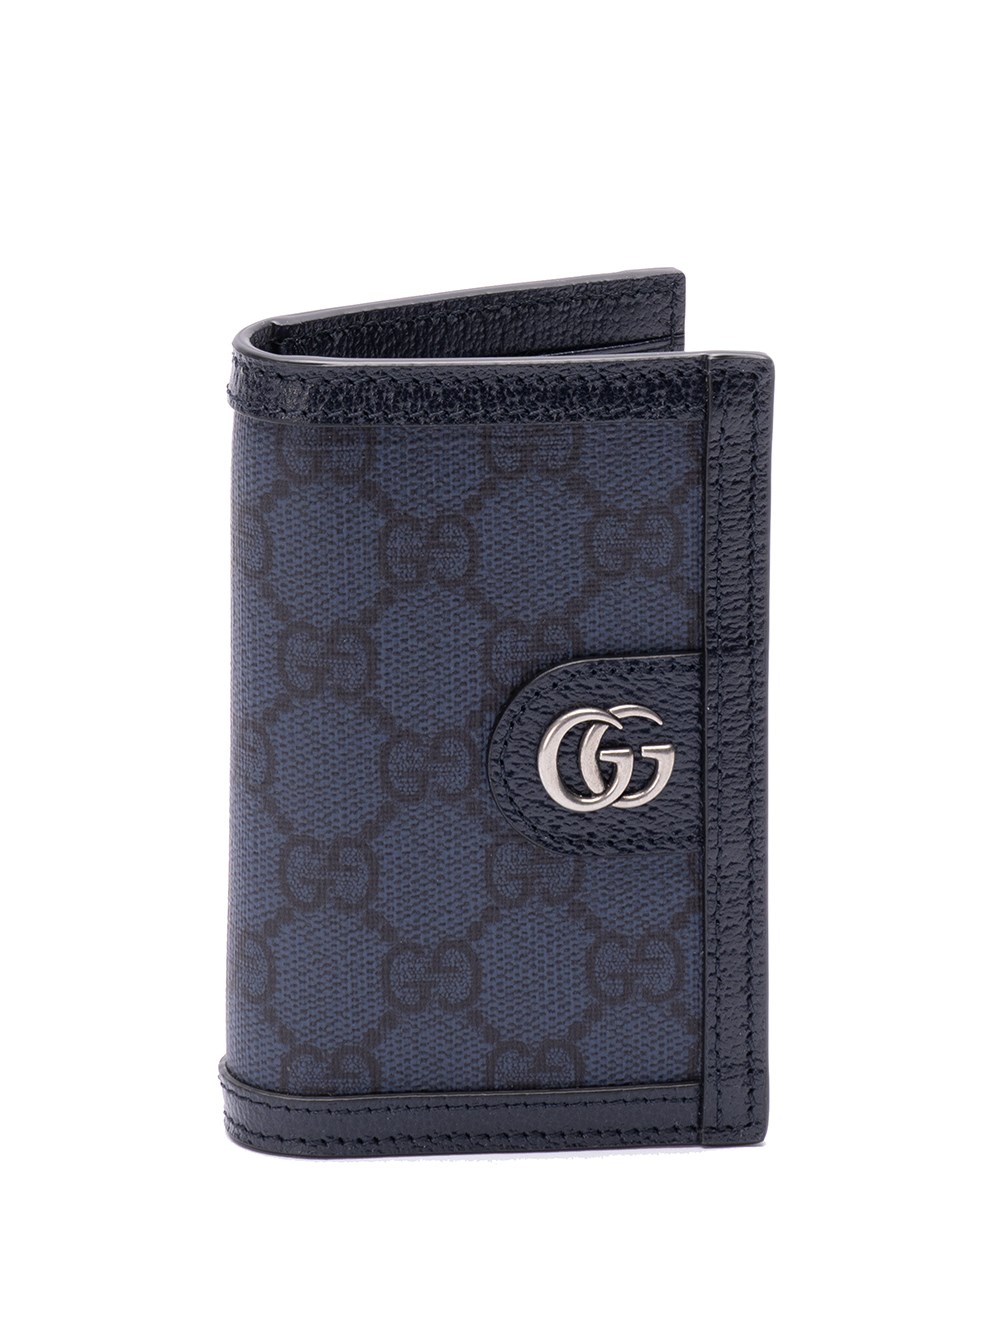 Gucci `ophidia Gg` Card Case In Blue